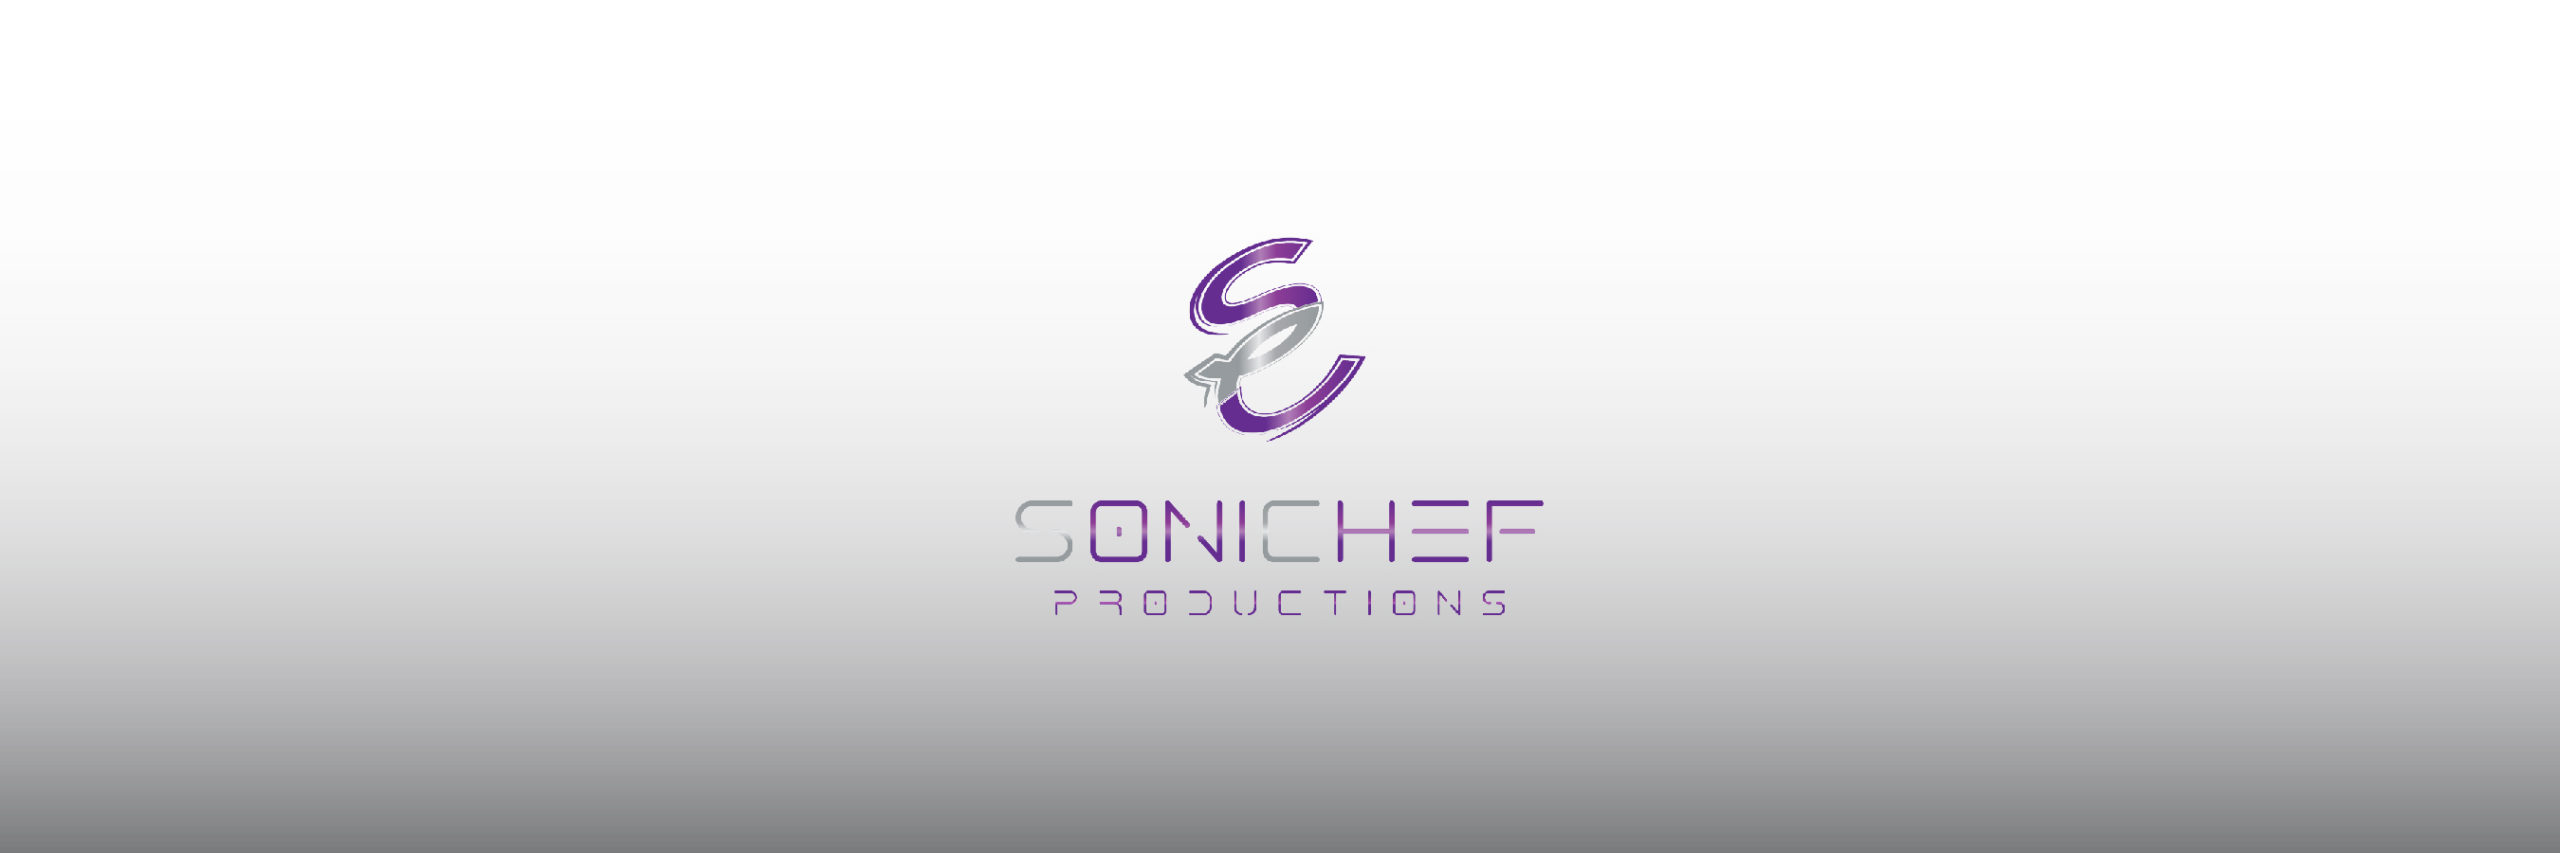 Logo Design - Sonic Chef Logo